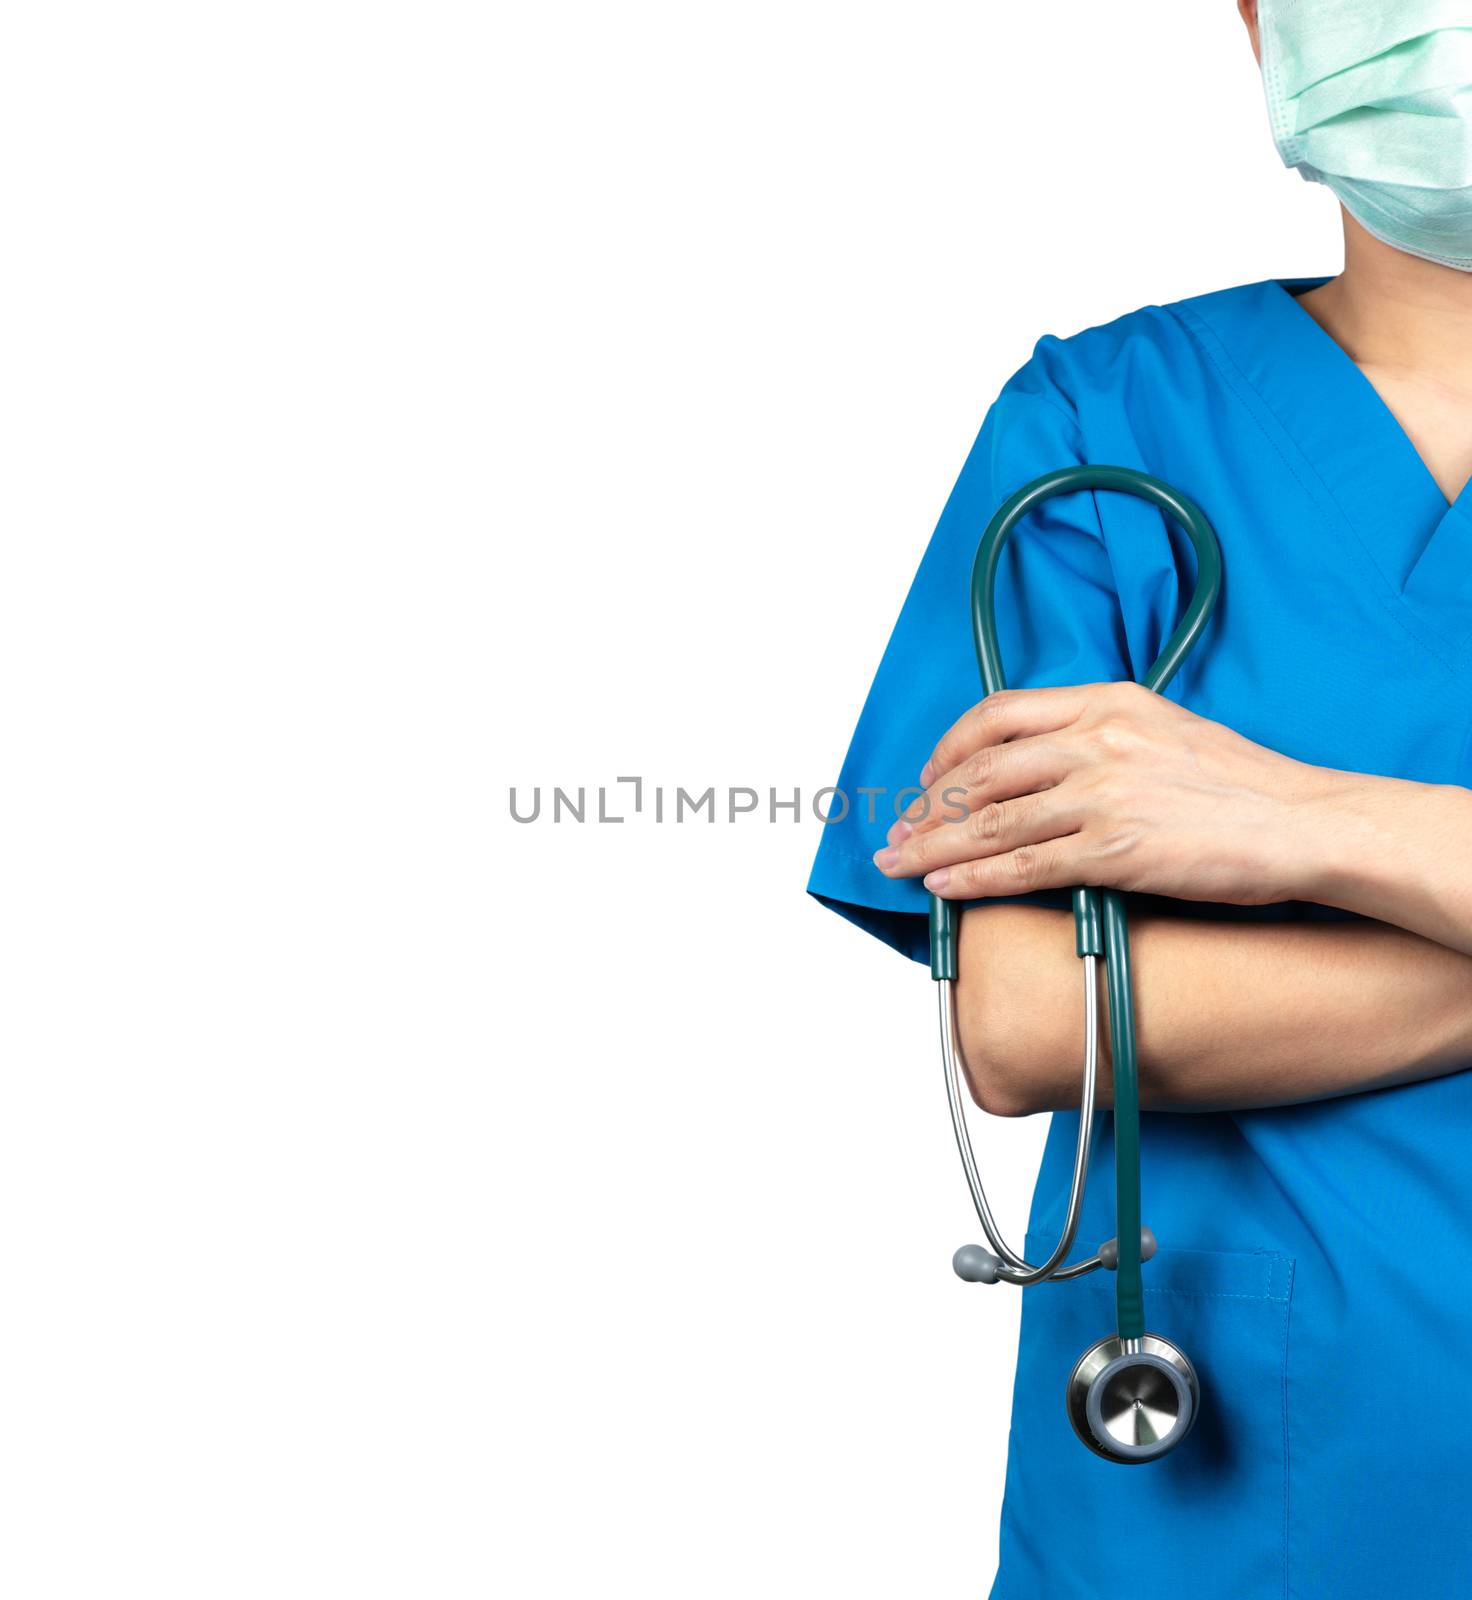 Surgeon doctor wear blue scrubs shirt uniform and green face mas by Fahroni